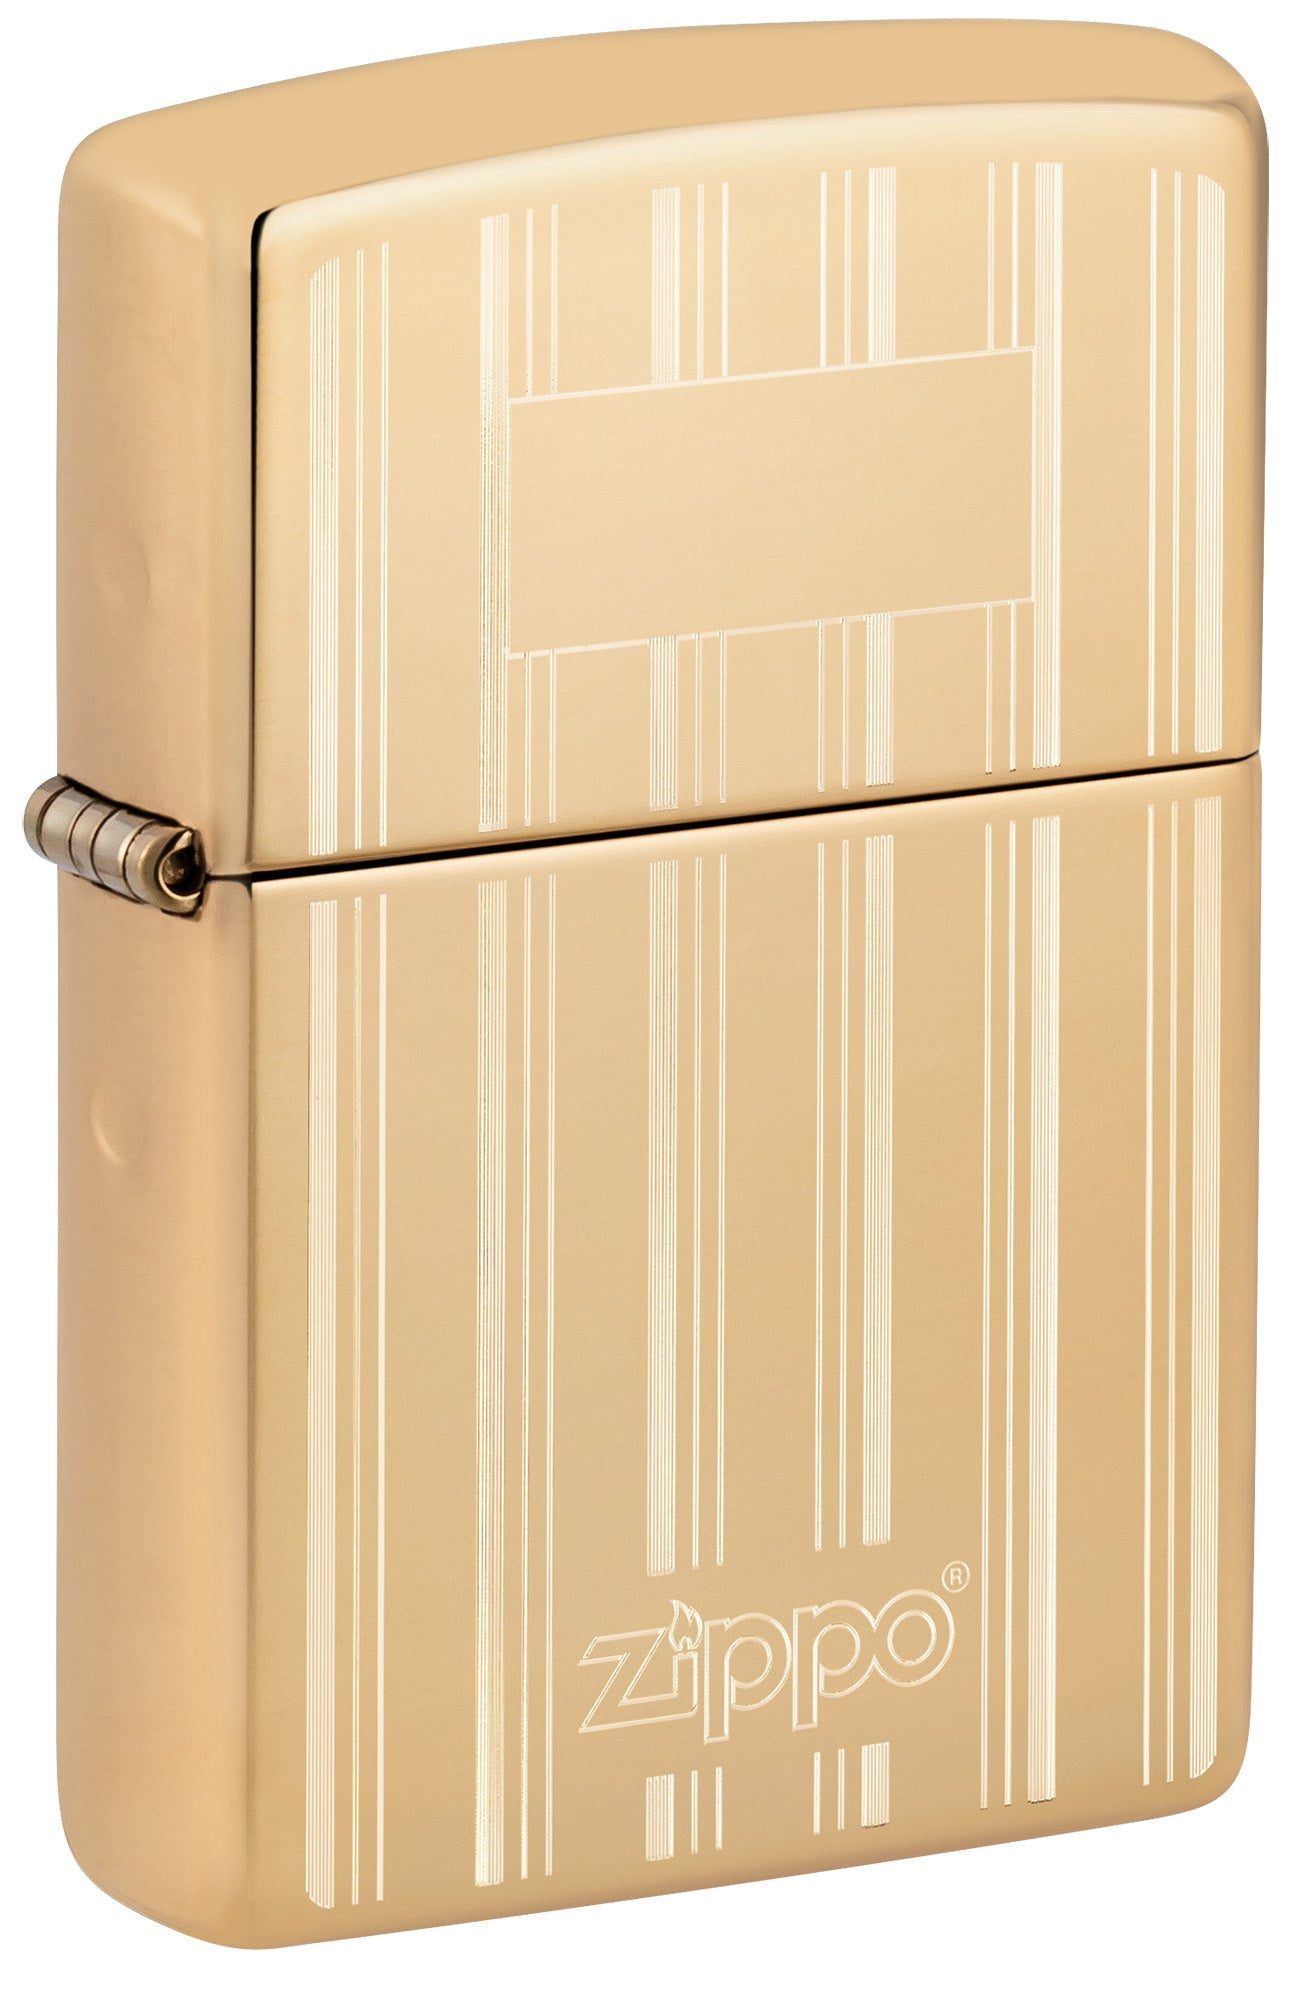 Zippo Lighter: Engraved Lines - High Polish Brass 46011